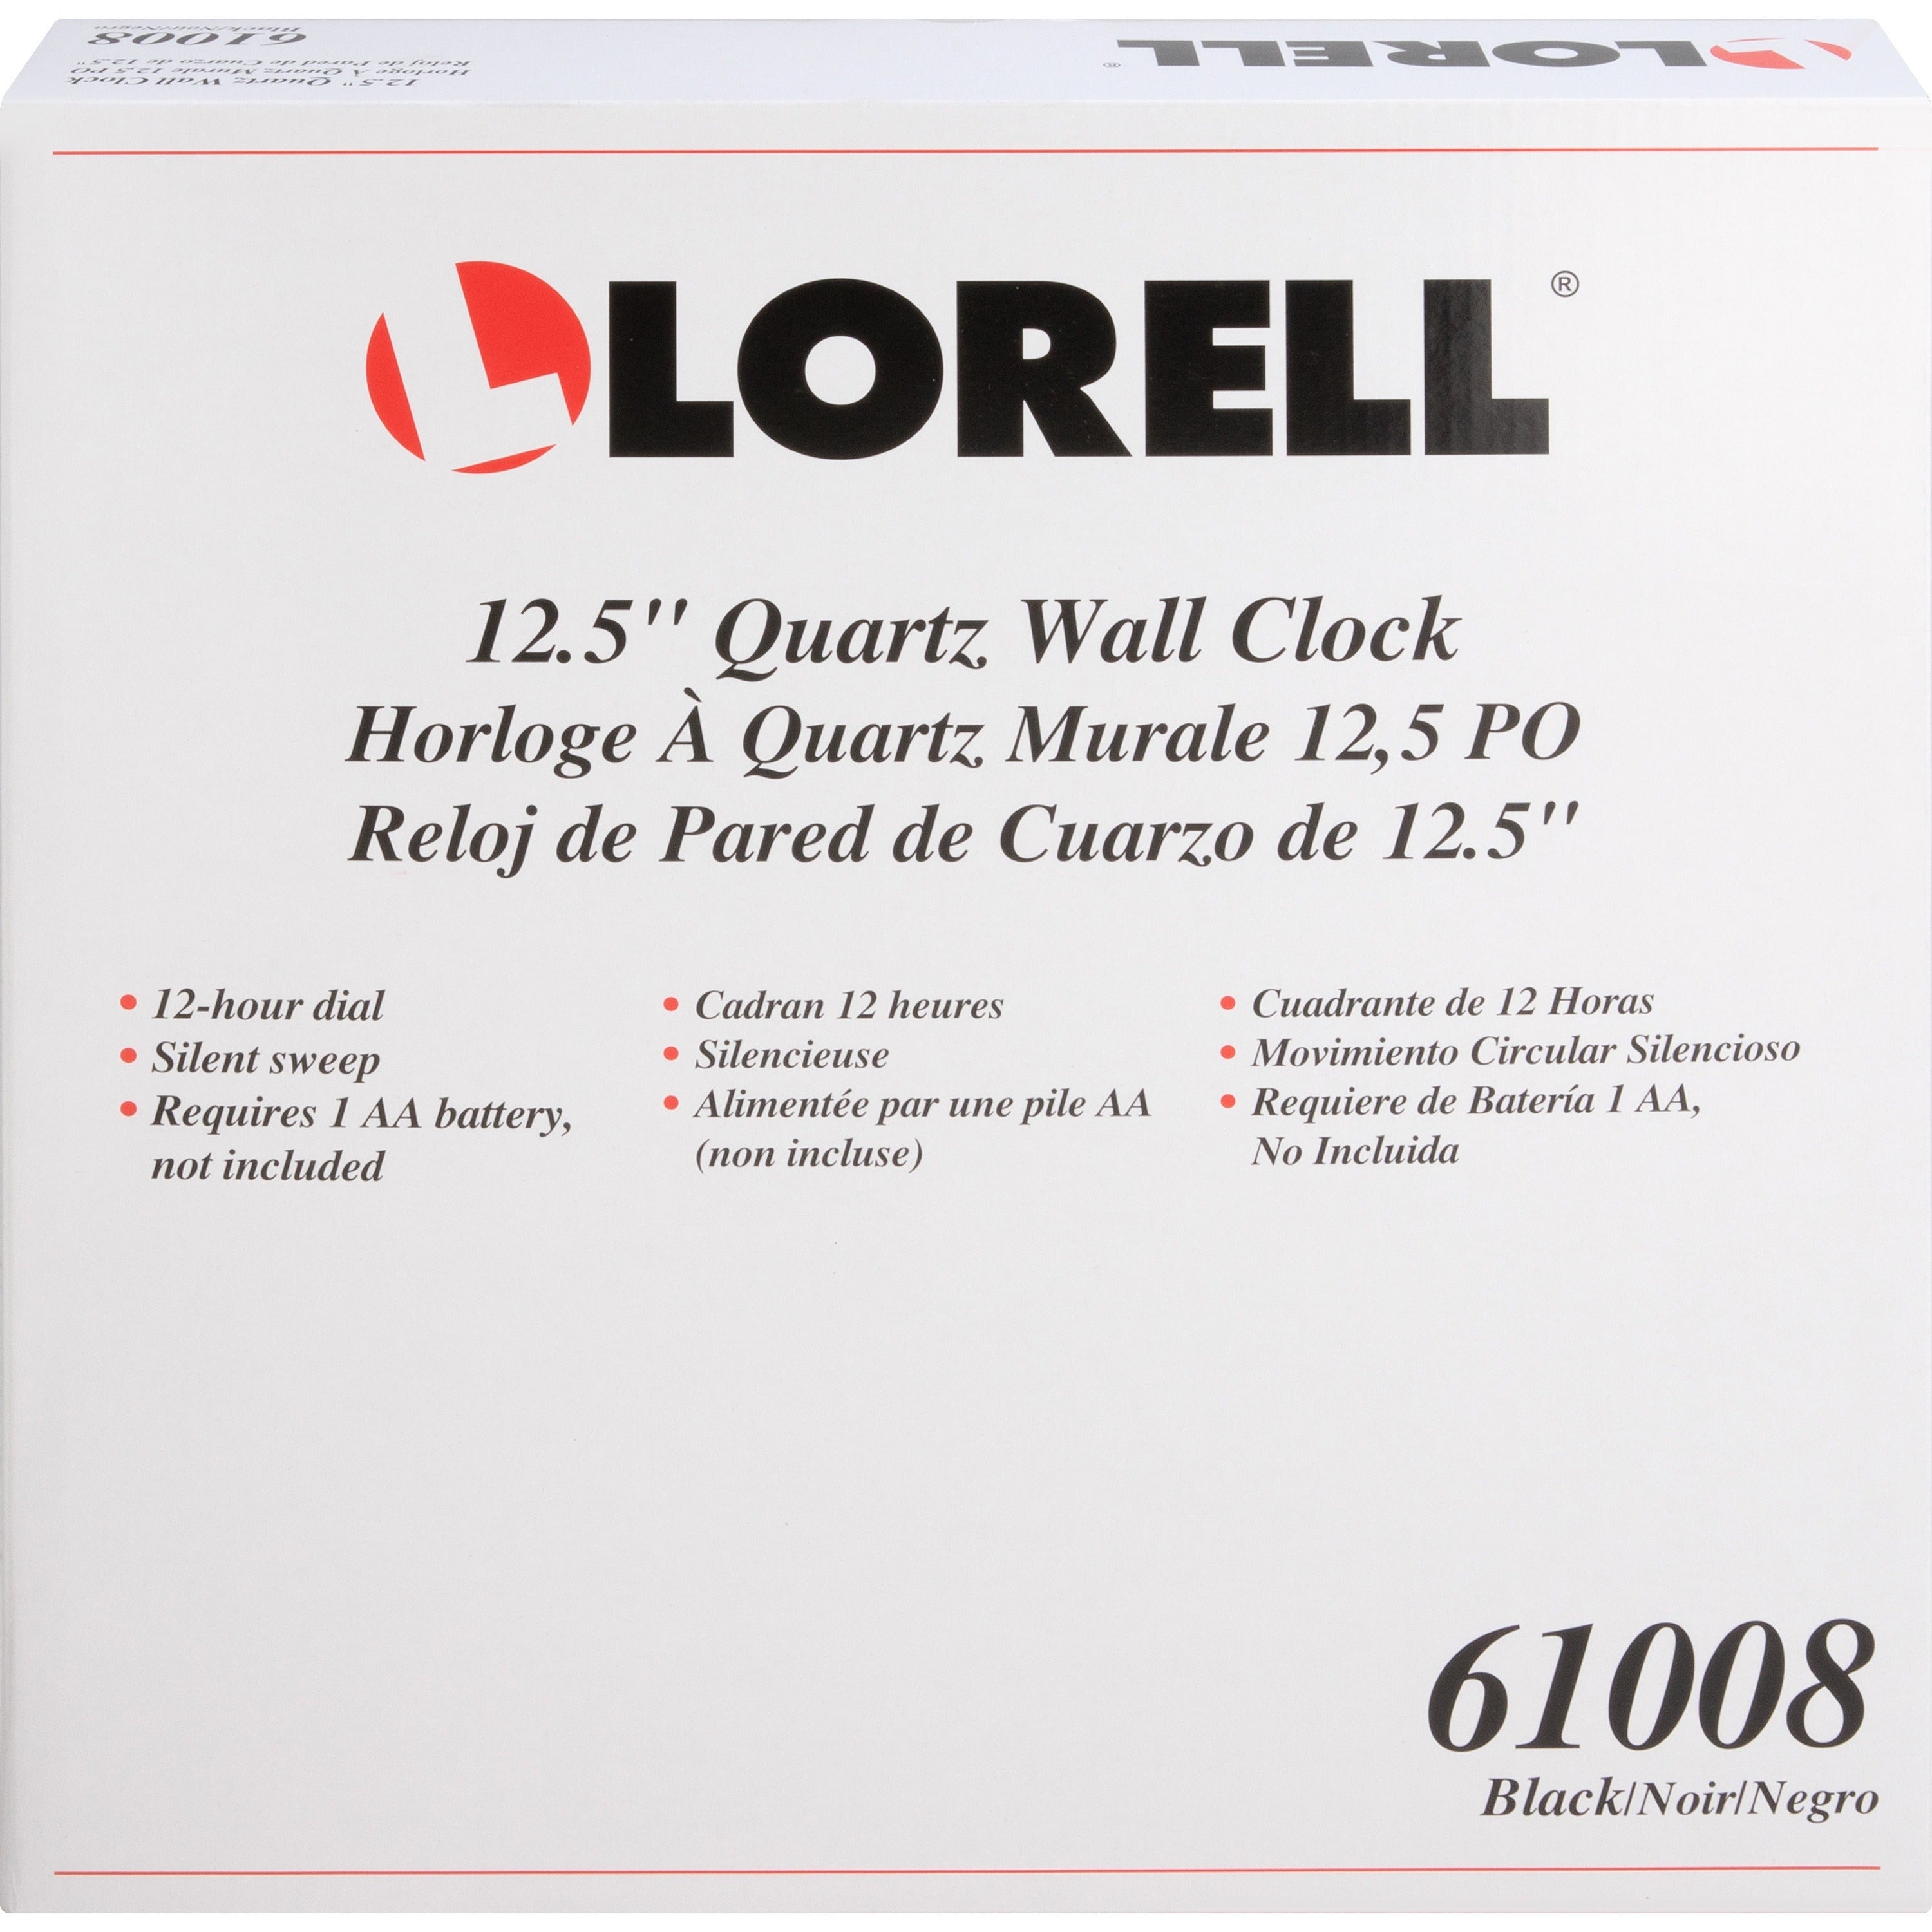 lorell-12-1-2-slimline-wall-clock-analog-quartz-black-modern-style_llr61008 - 2